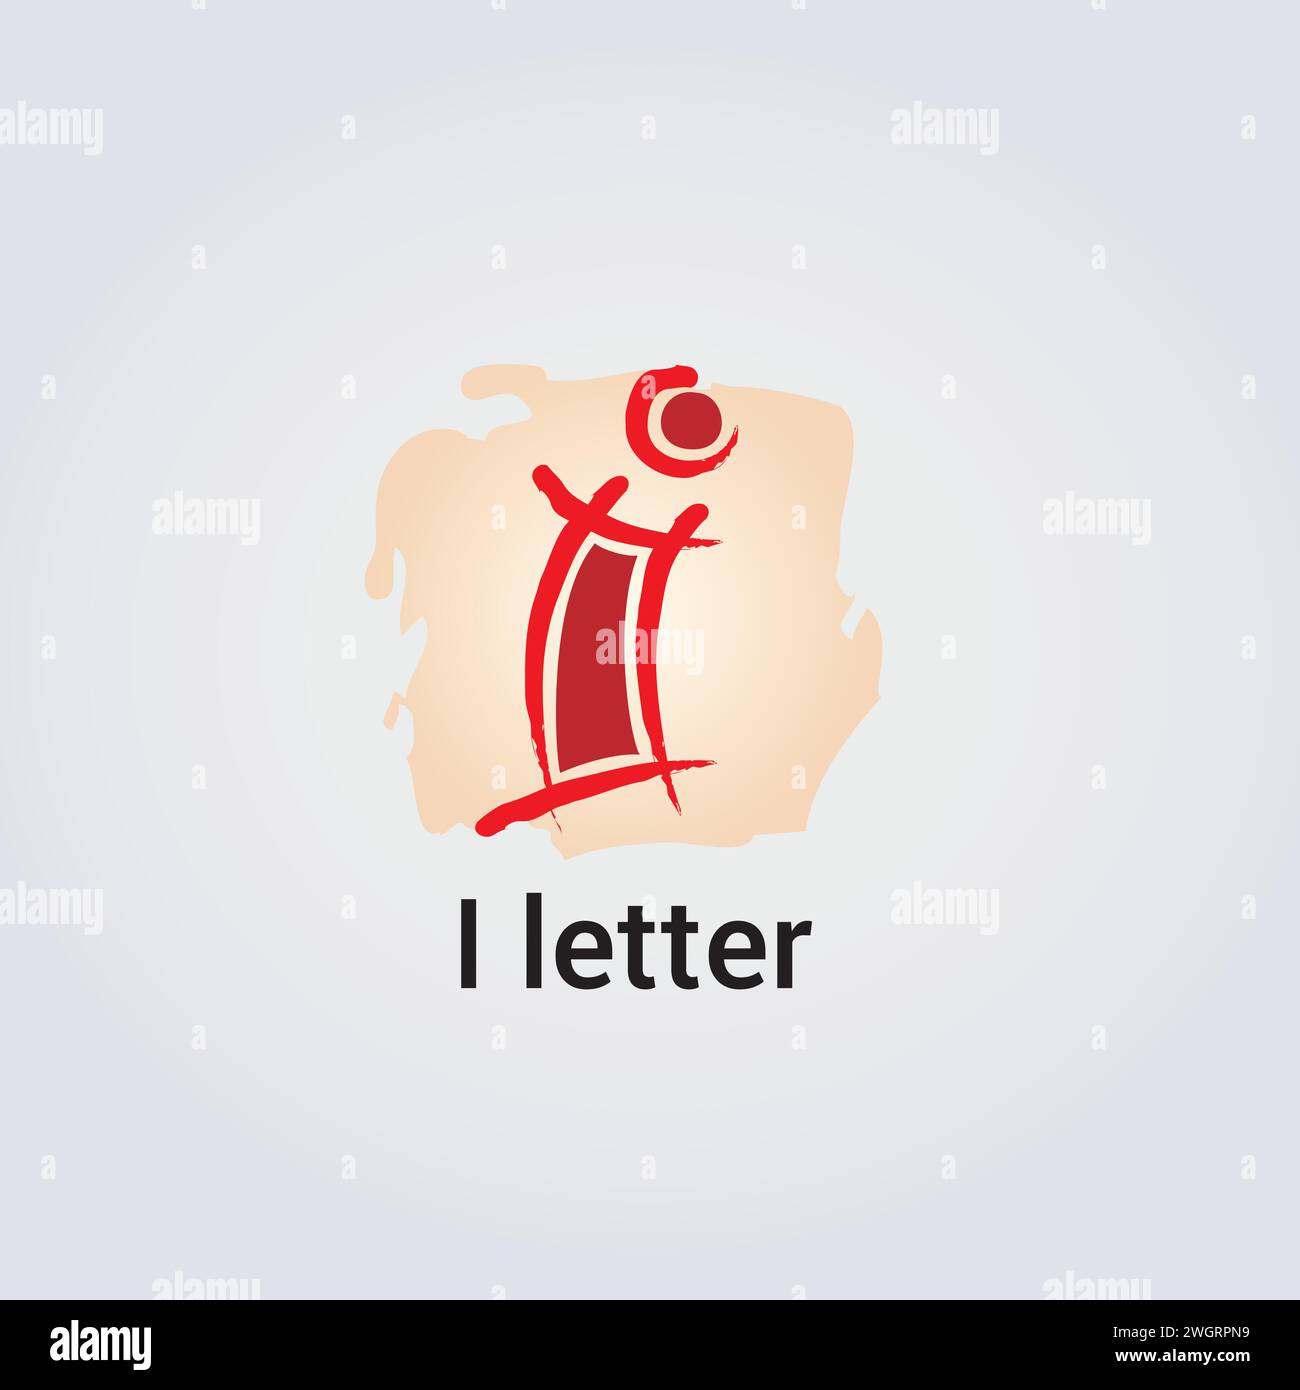 I Letter Icon Design Single Isolated Logo Design Brand Corporate Identity Various Colors Editable Template Vector Monogram Emblem Illustration Brand Stock Vector